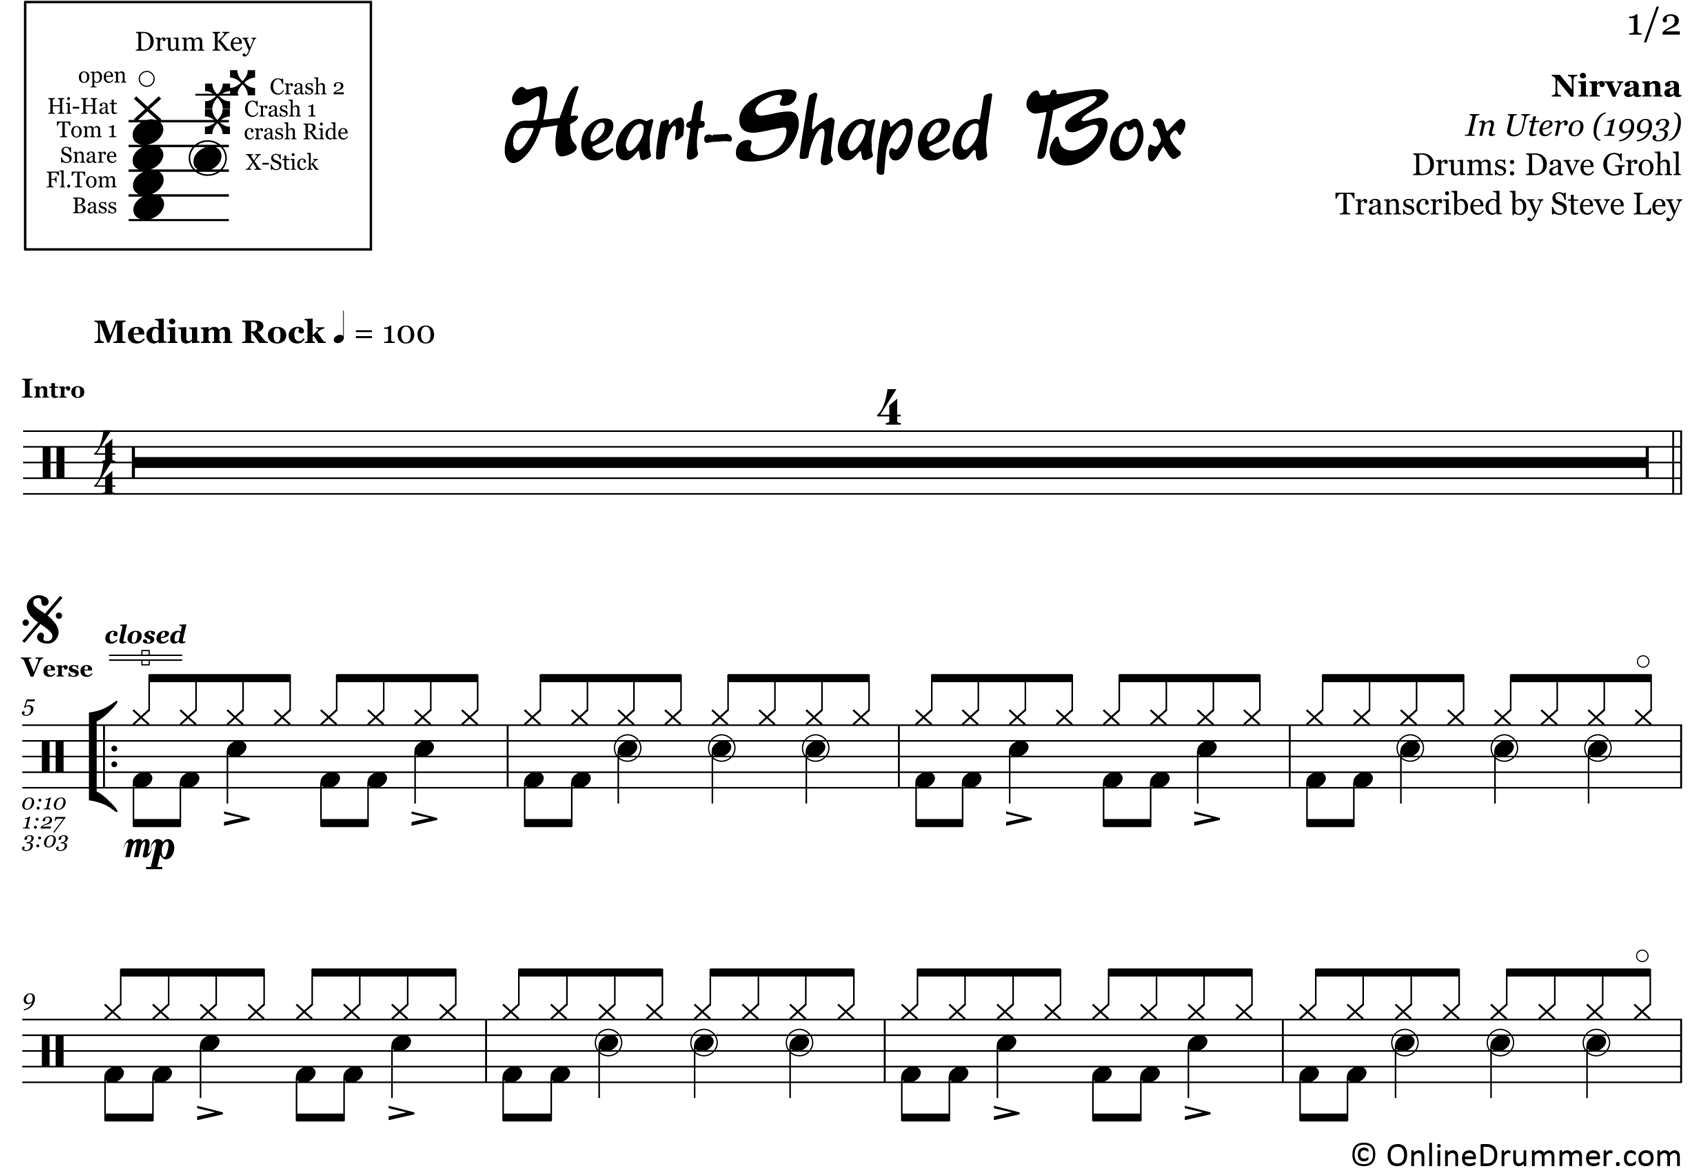 Heart-Shaped Box - Nirvana - Drum Sheet Music